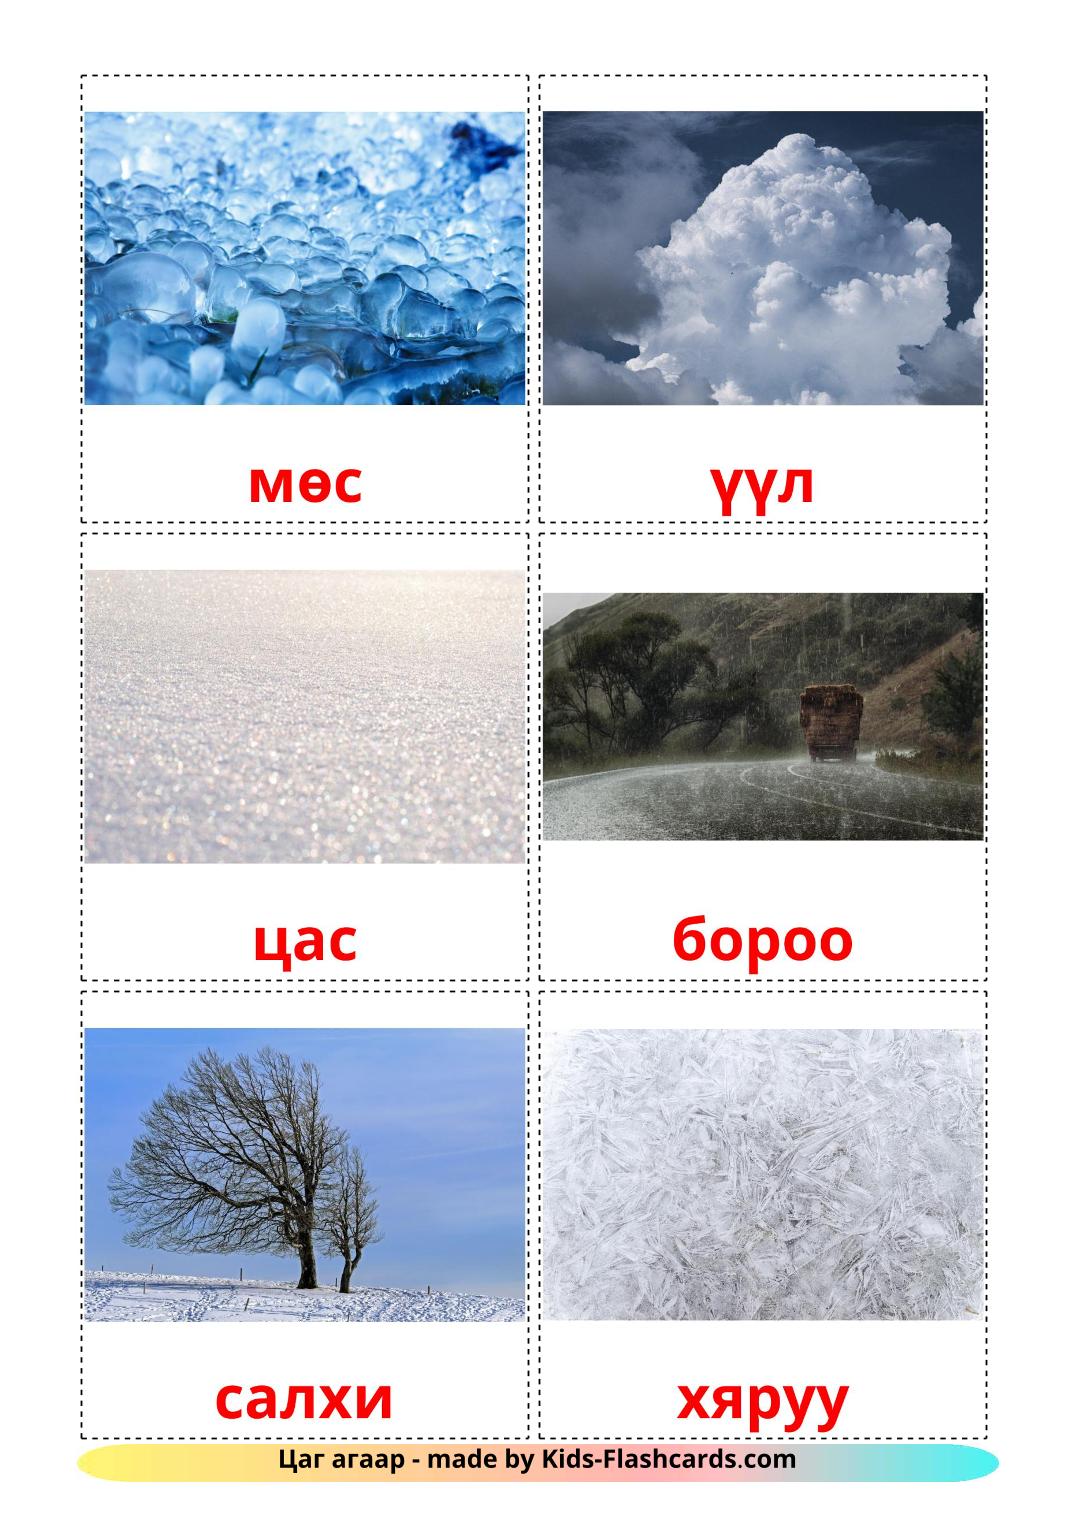 Tempo atmosferico - 31 flashcards mongolo stampabili gratuitamente